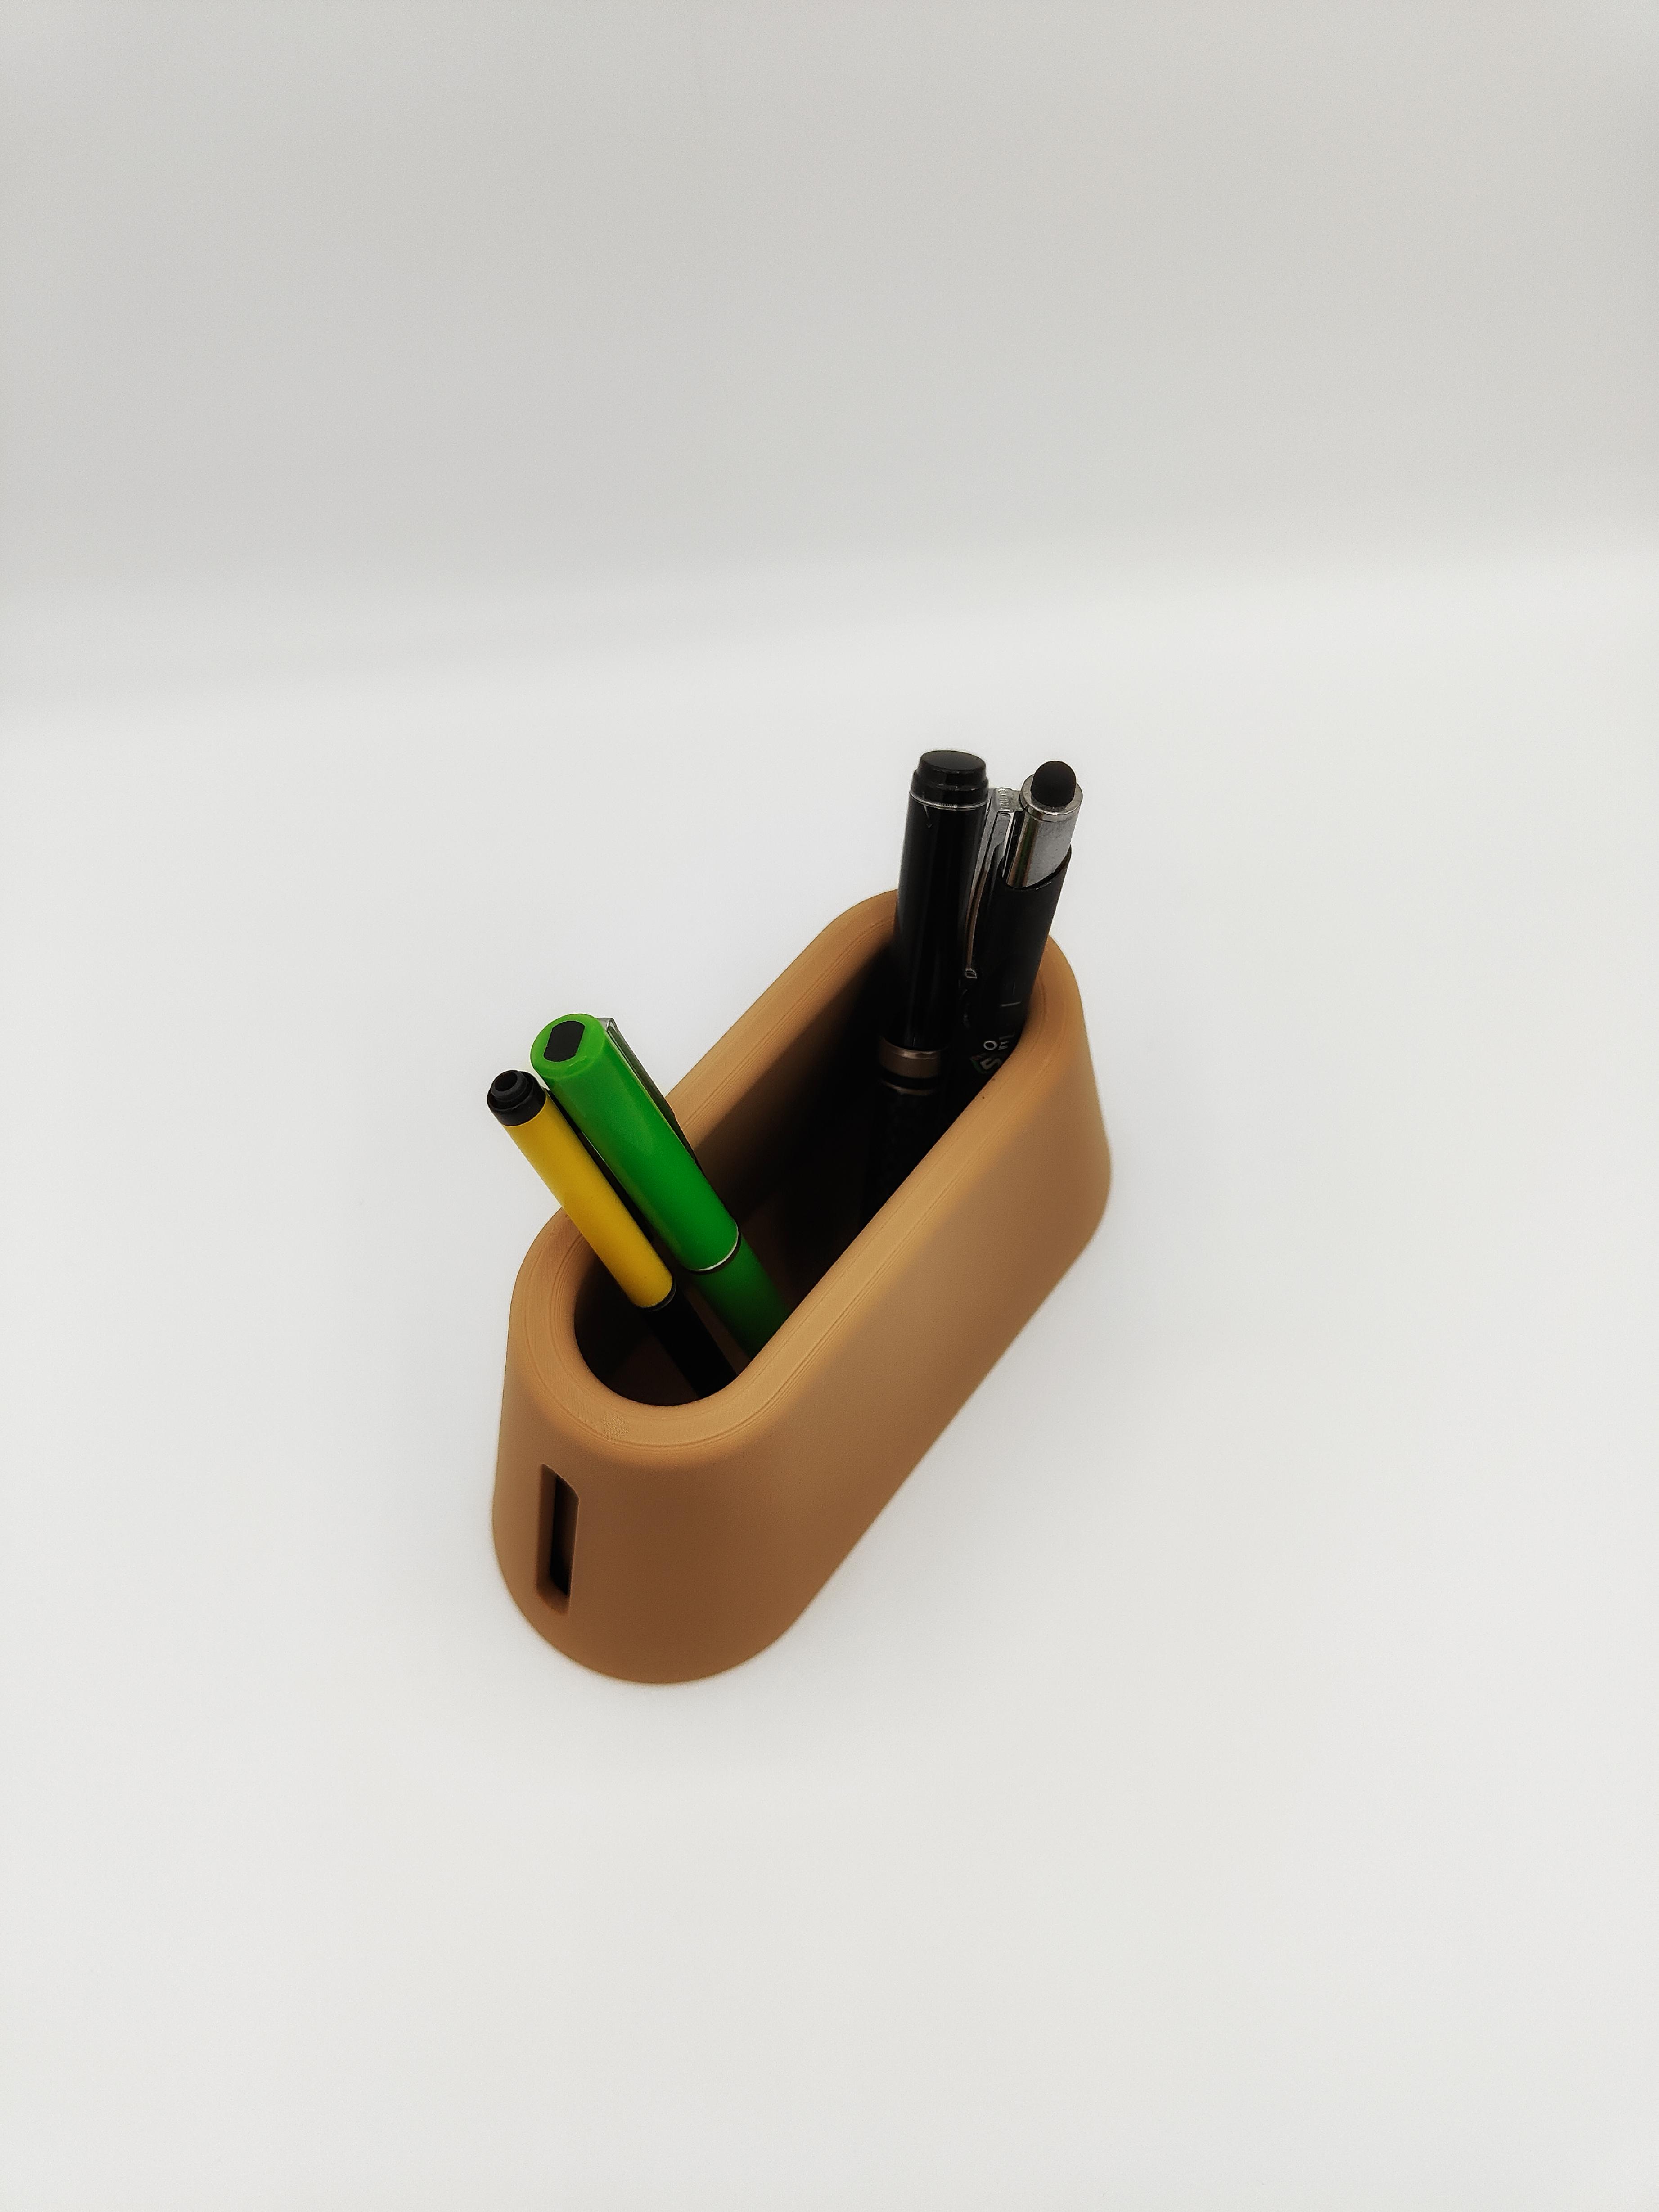 EcoForm Pen Holder 3d model